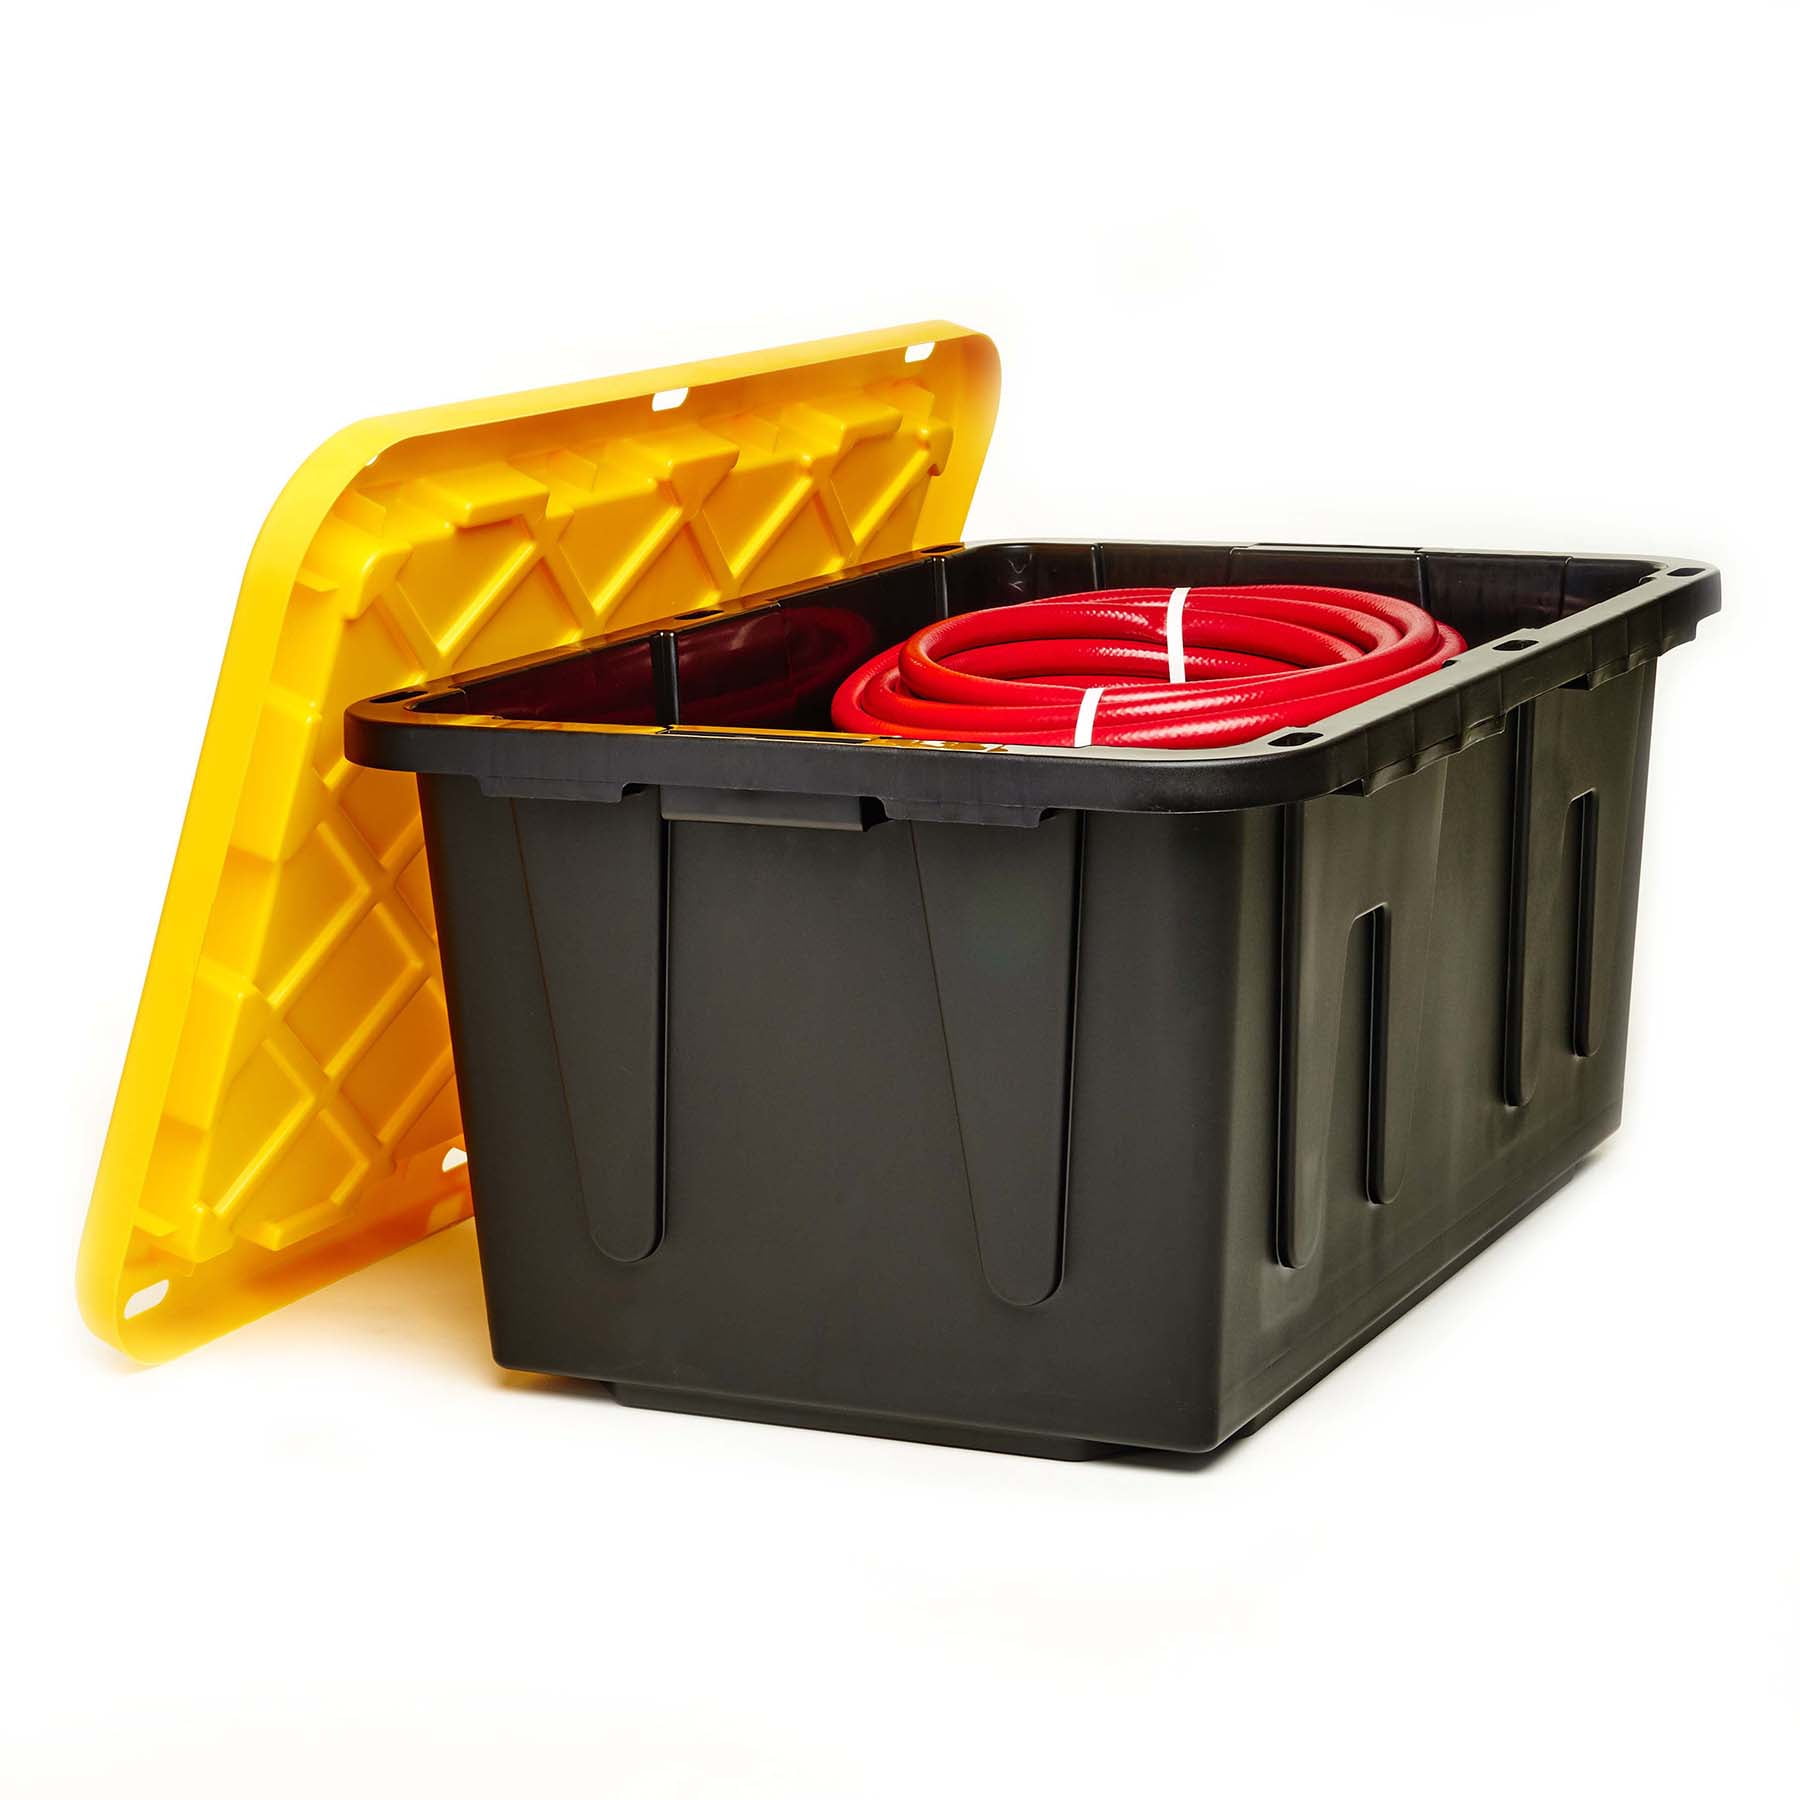 Homz Durabilt 27 Gallon Tough Container, Black and Yellow, Set of 2 